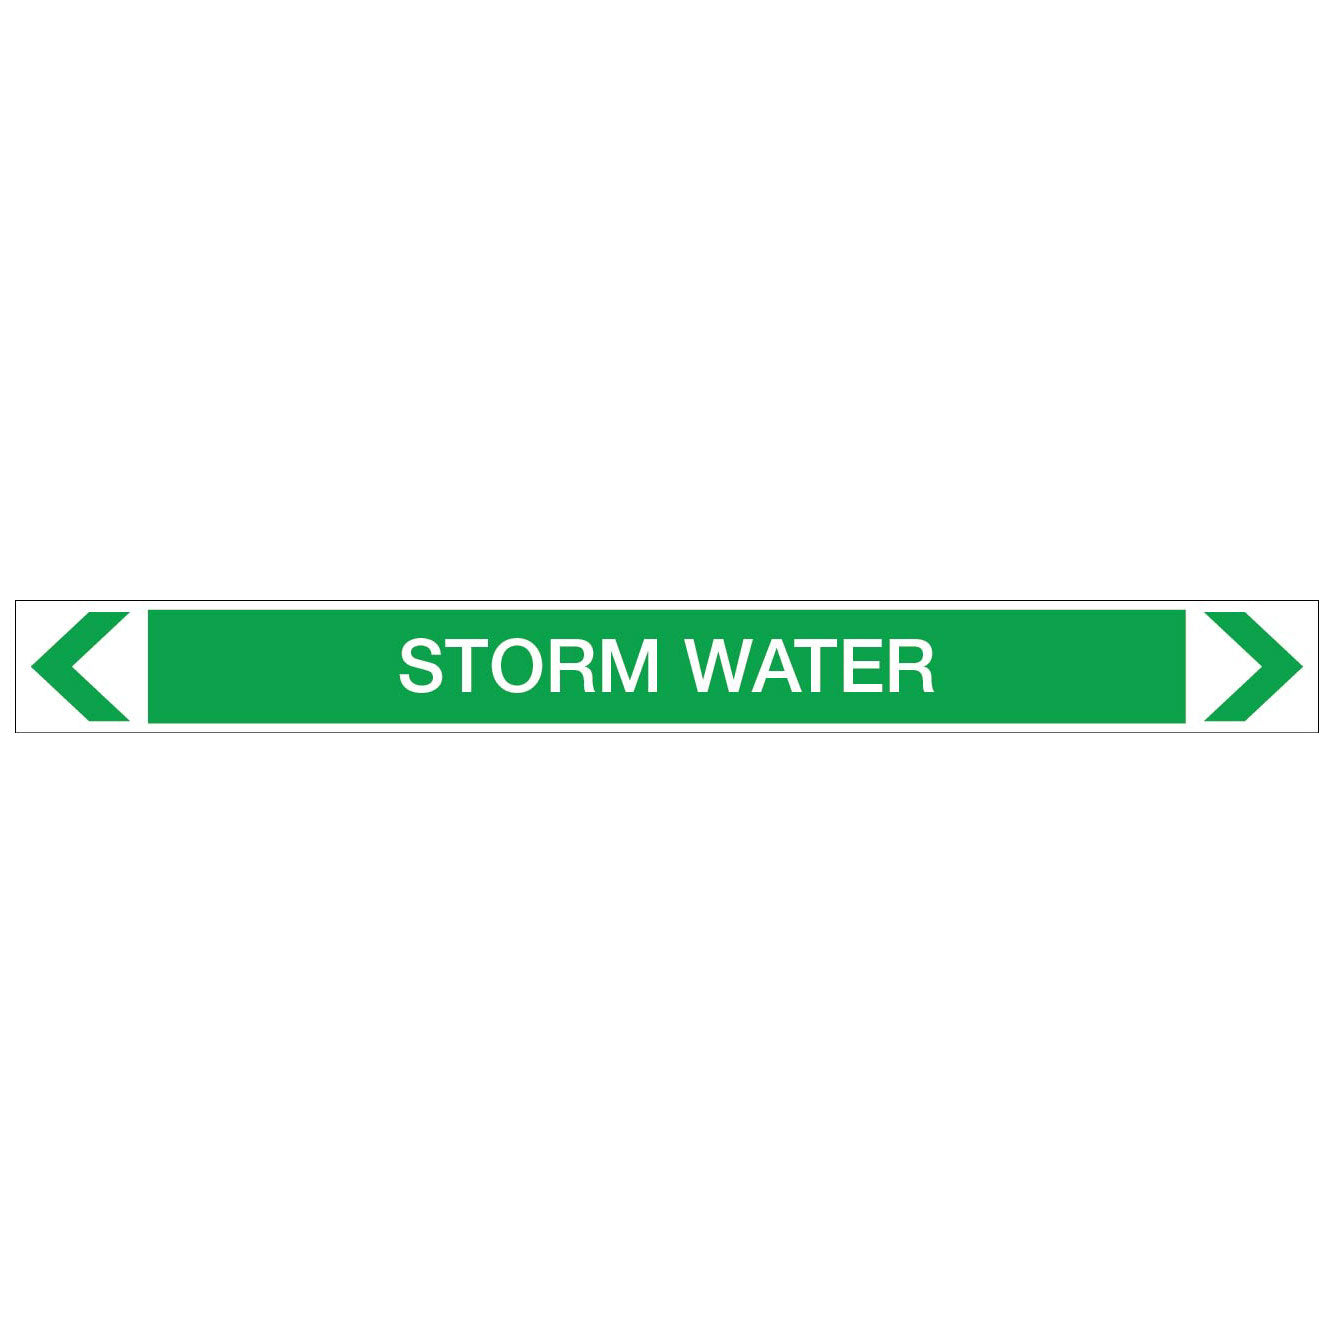 Water - Storm Water - Pipe Marker Sticker